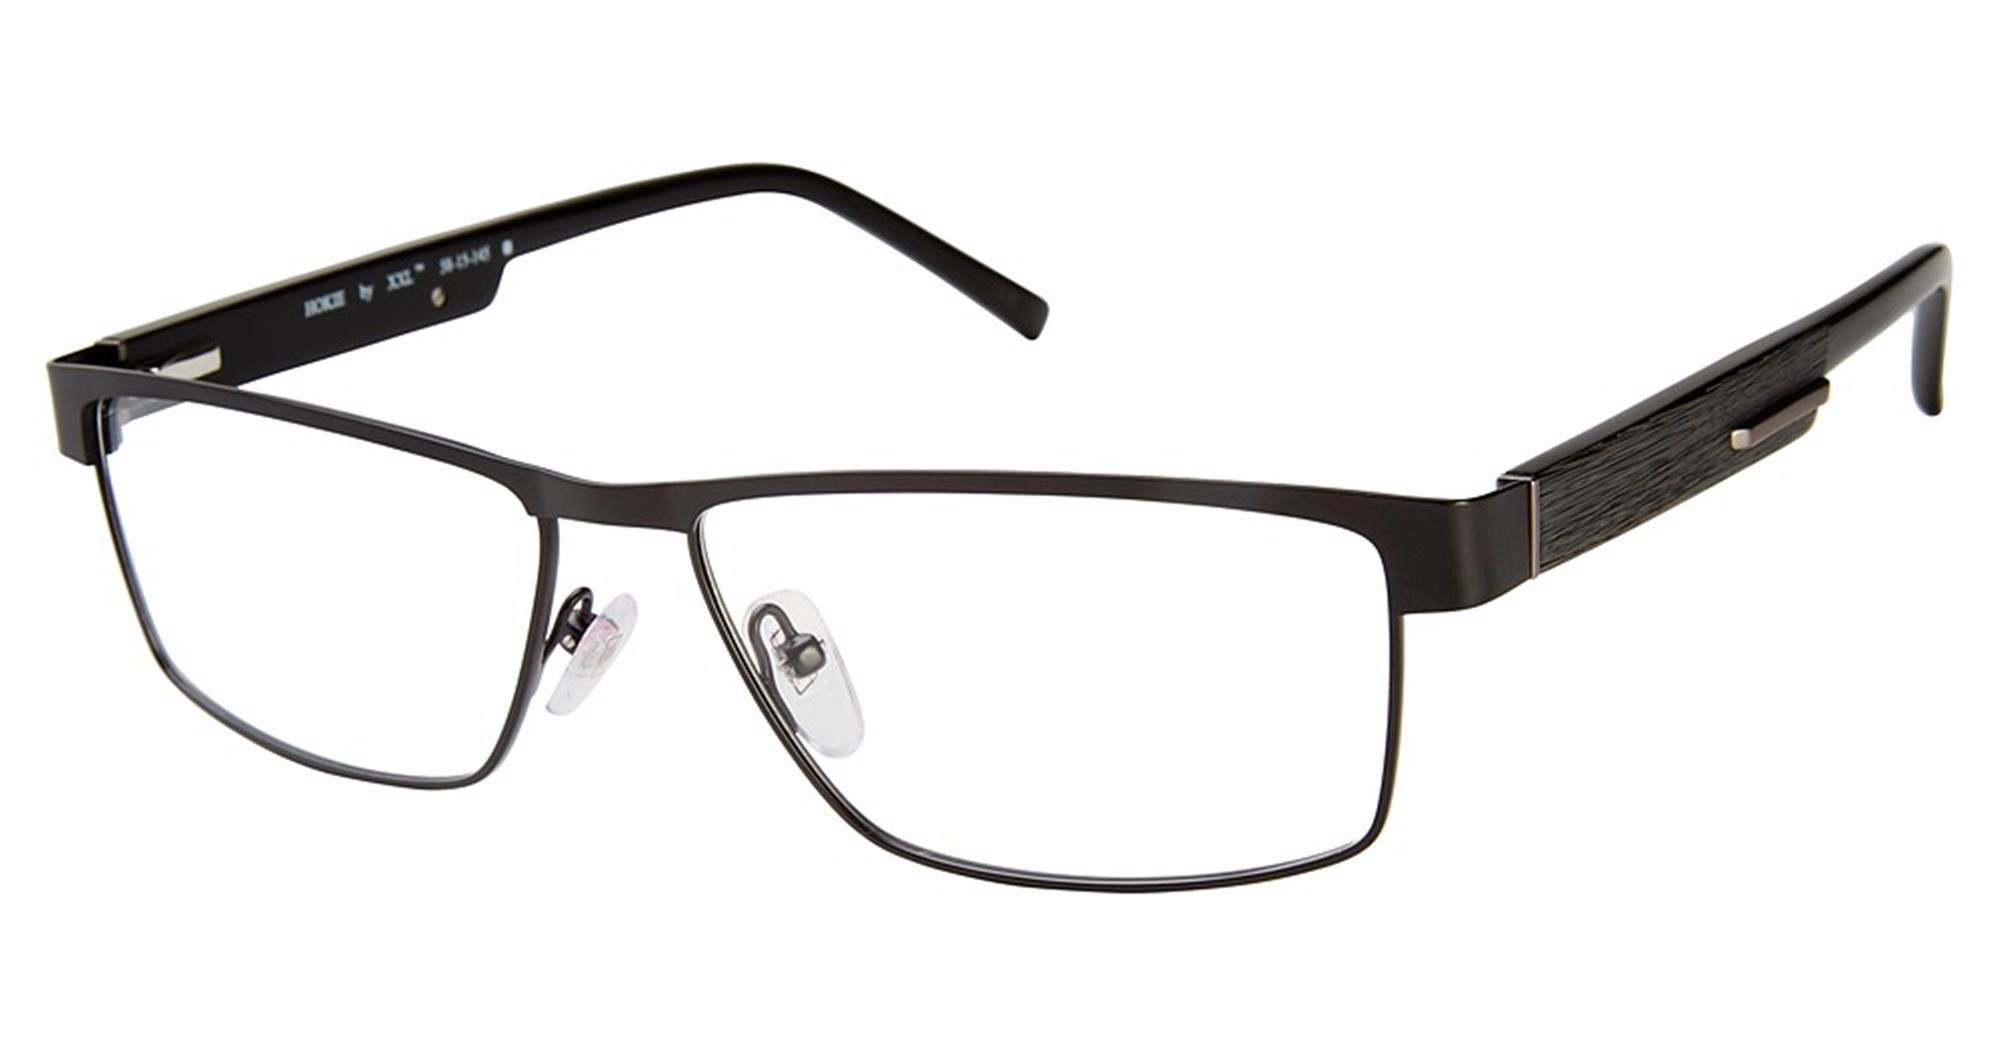 XXL HOKIE Eyeglasses - XXL by Ron Jaworski Authorized Retailer ...